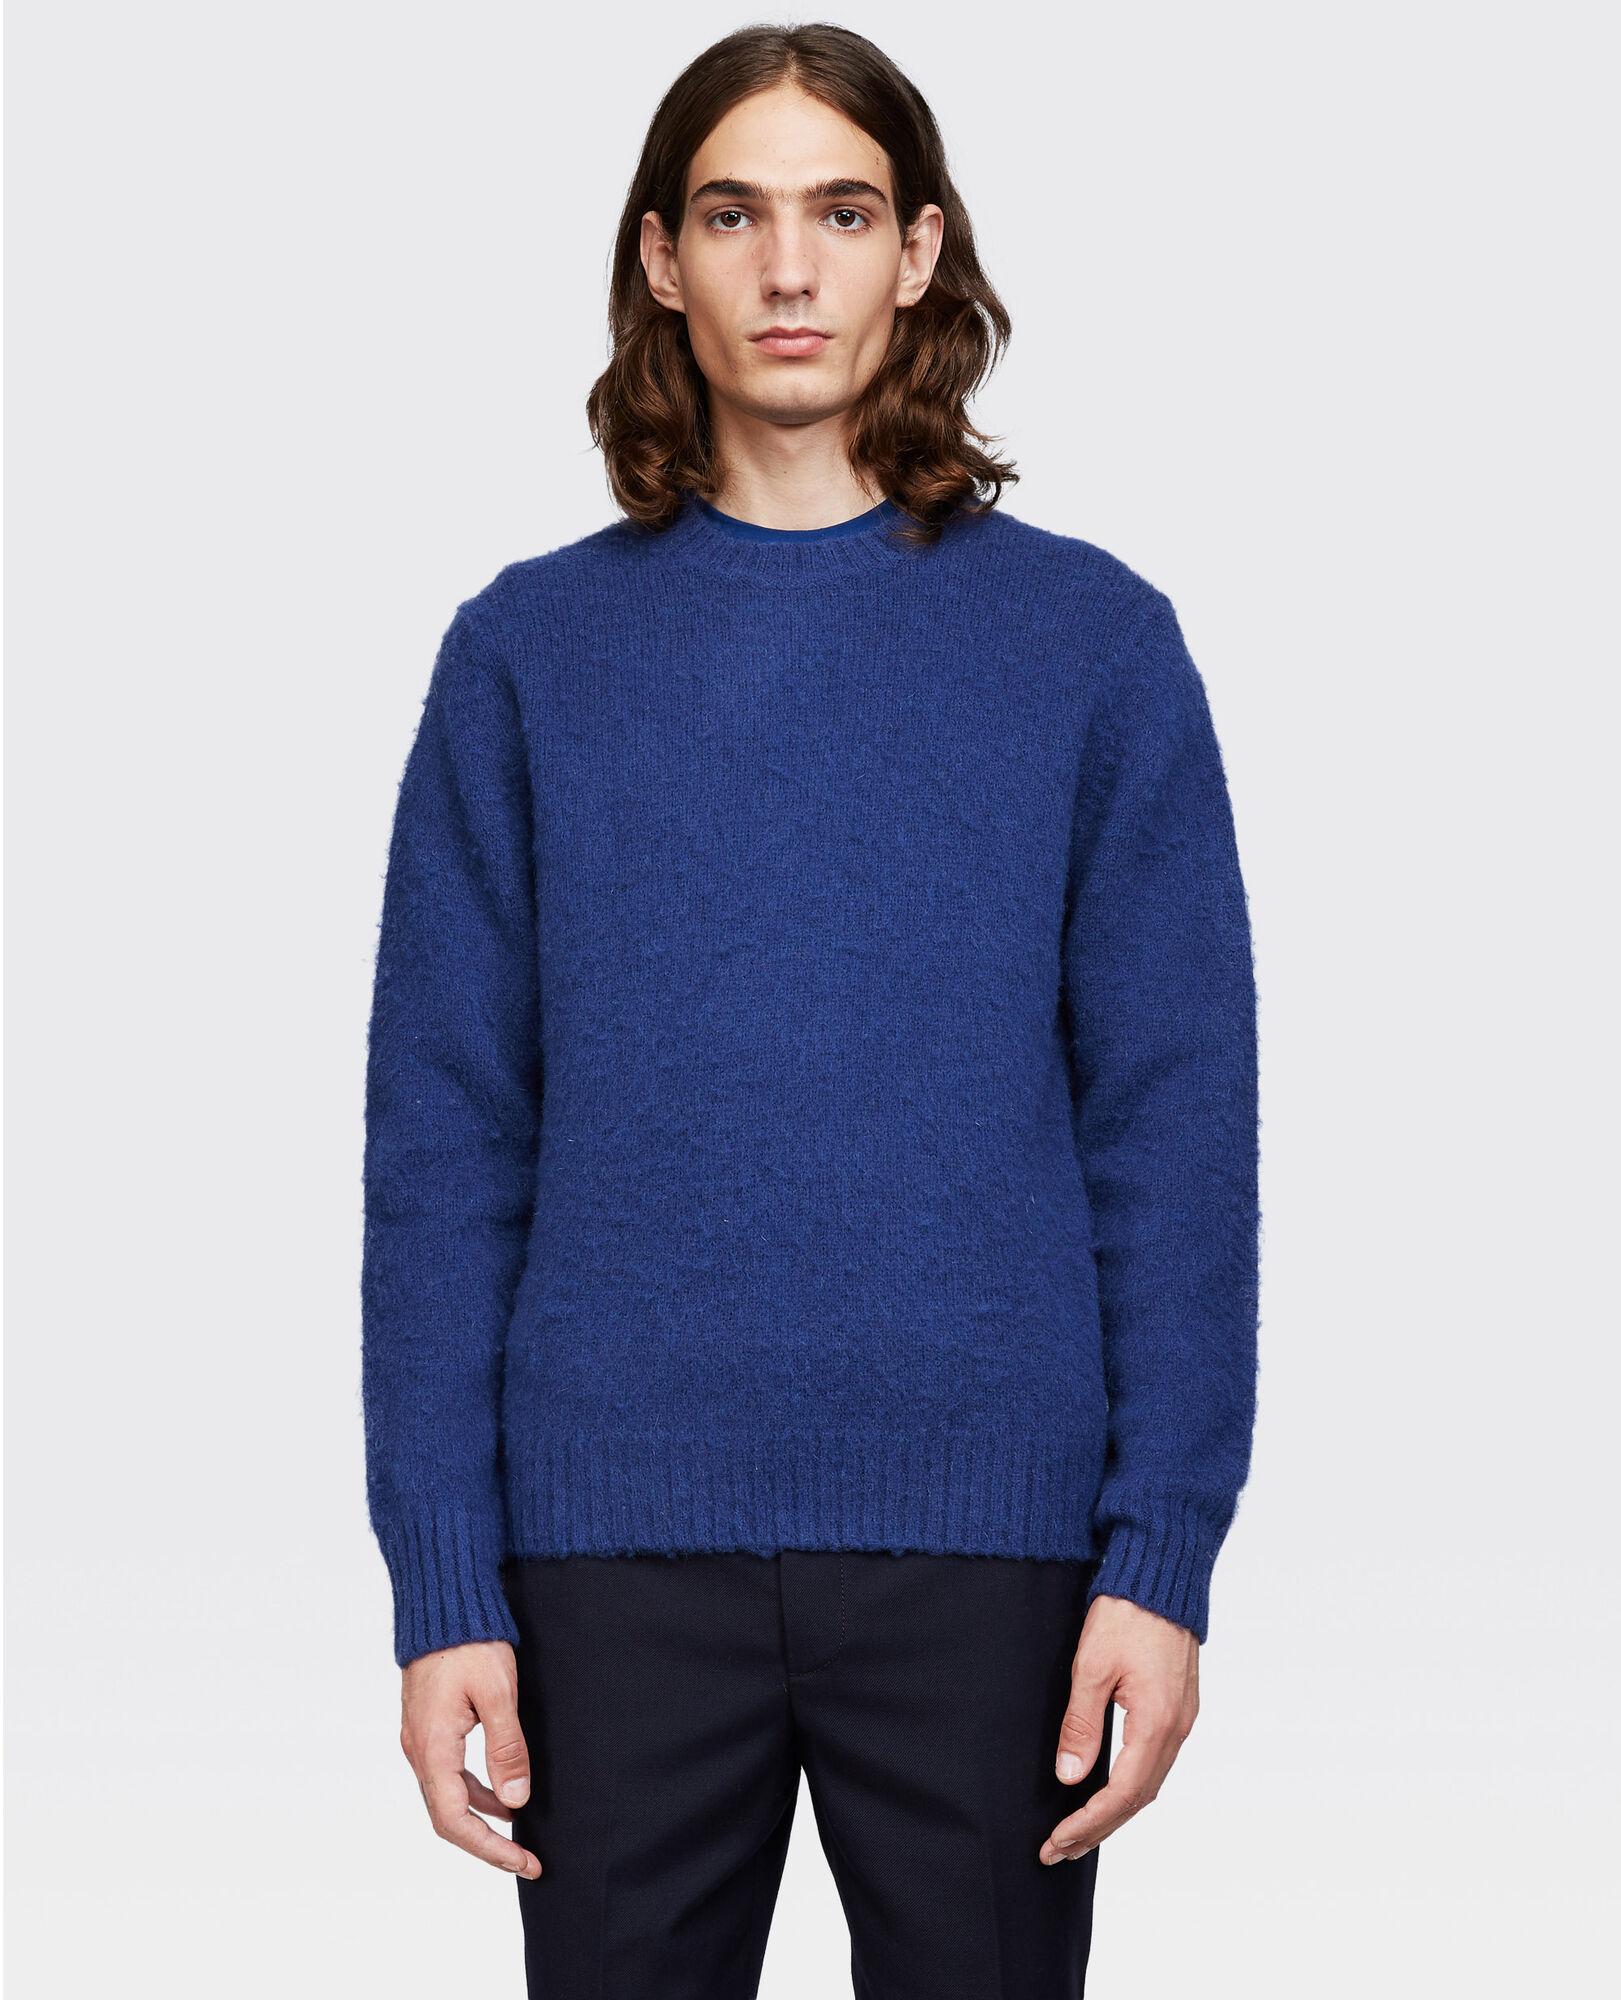 Aspesi Crew-neck Sweater In Brushed Shetland Wool in Blue for Men - Lyst